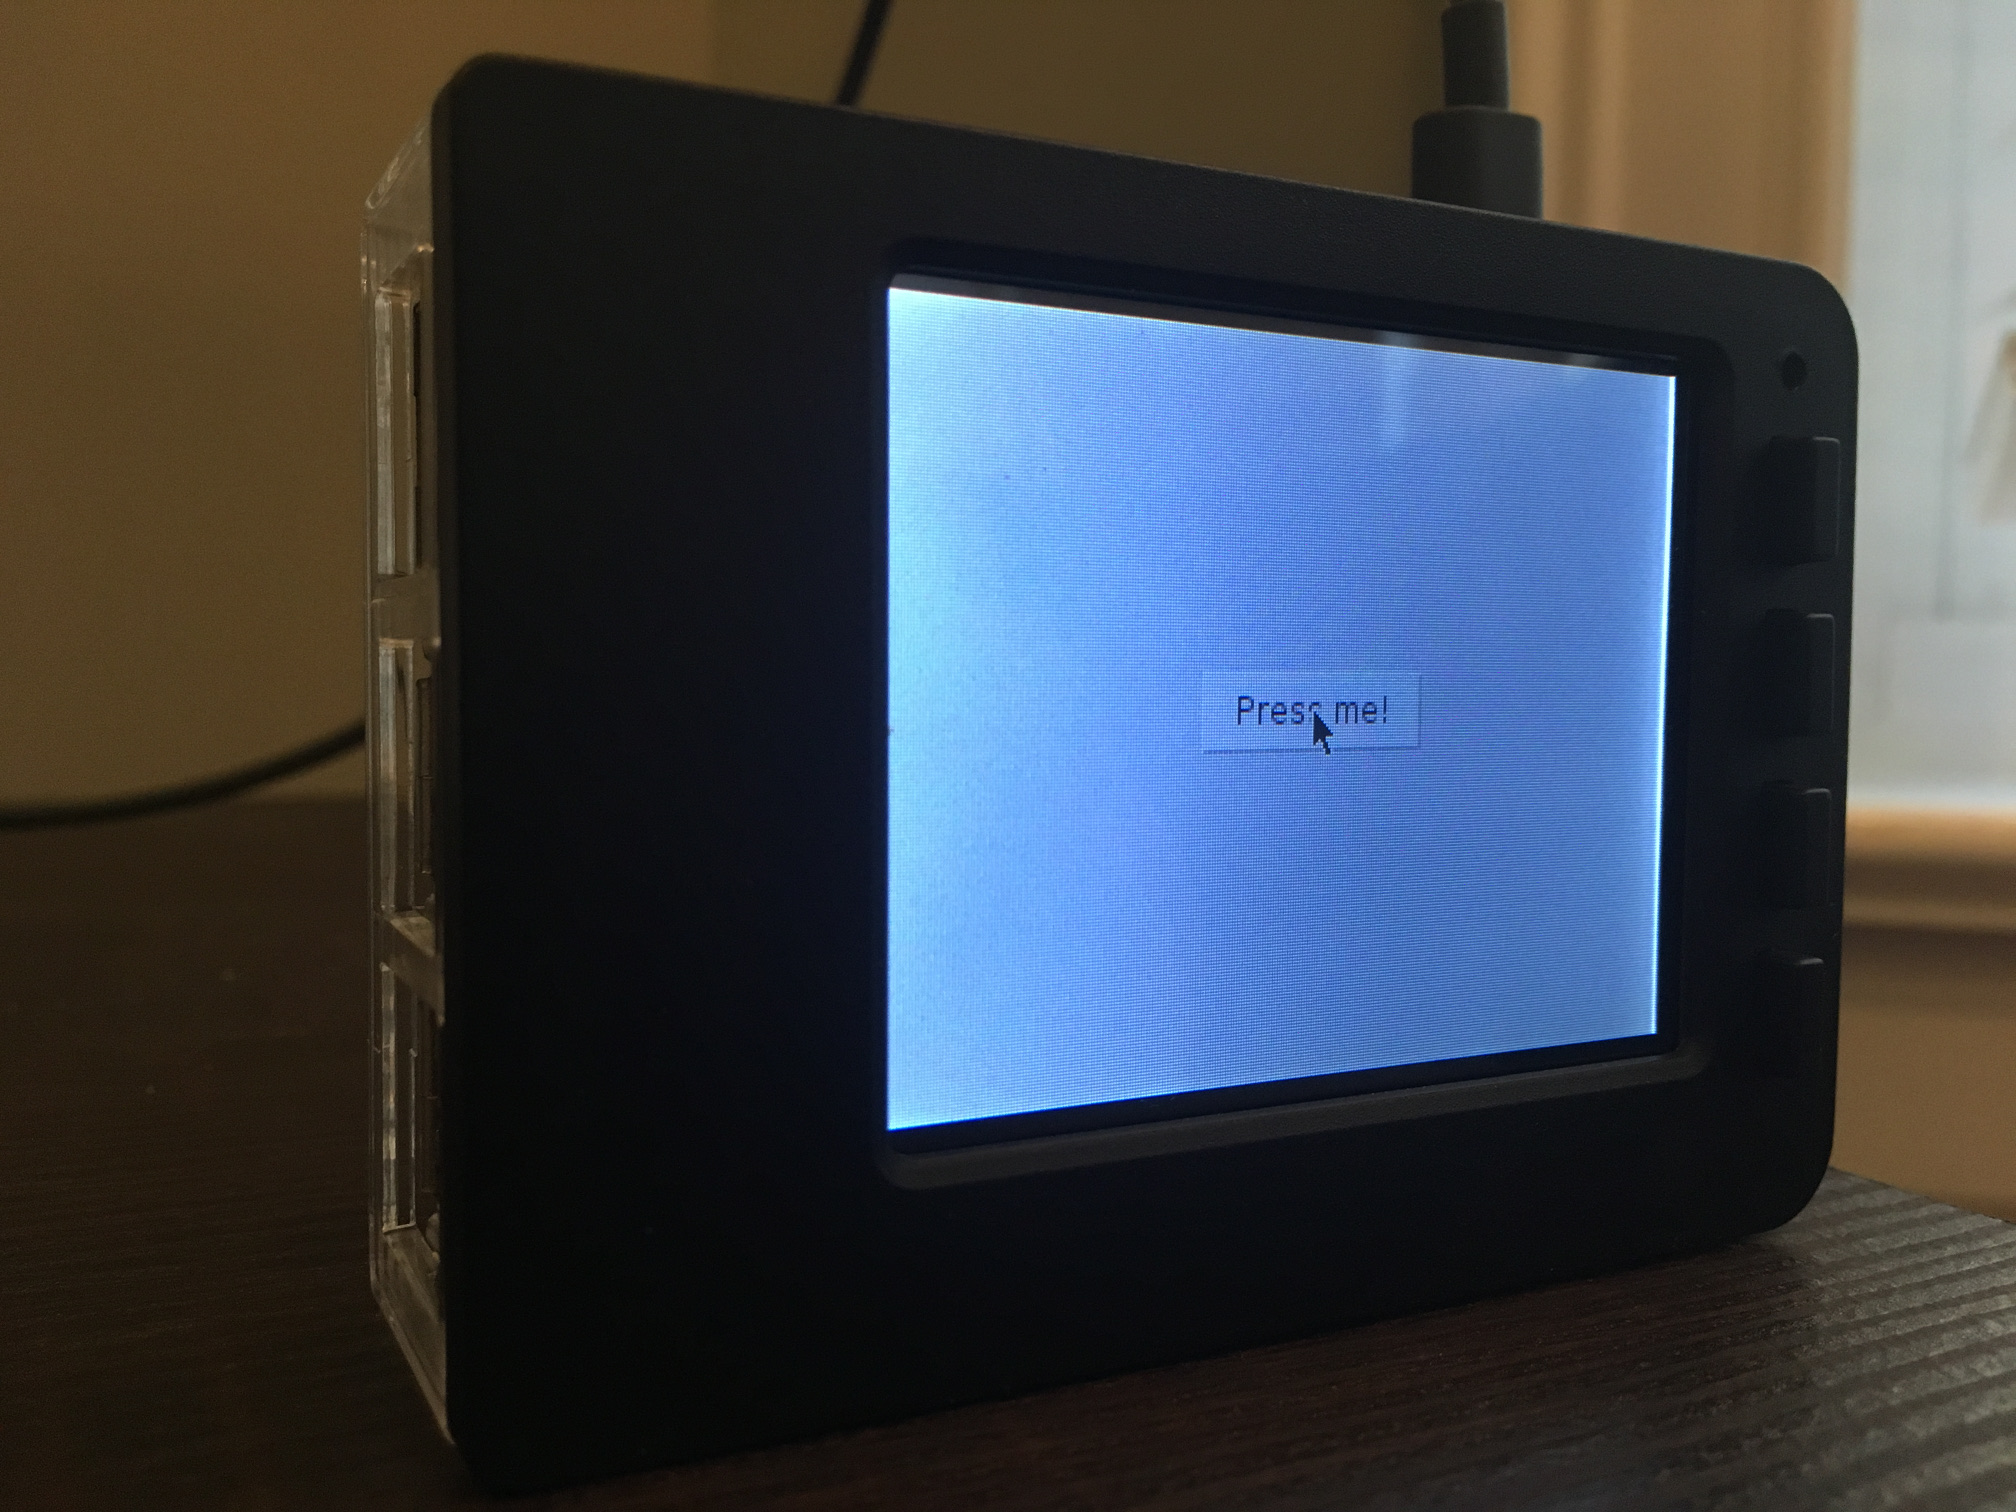 Raspberry Pi With an Adafruit TFT Display